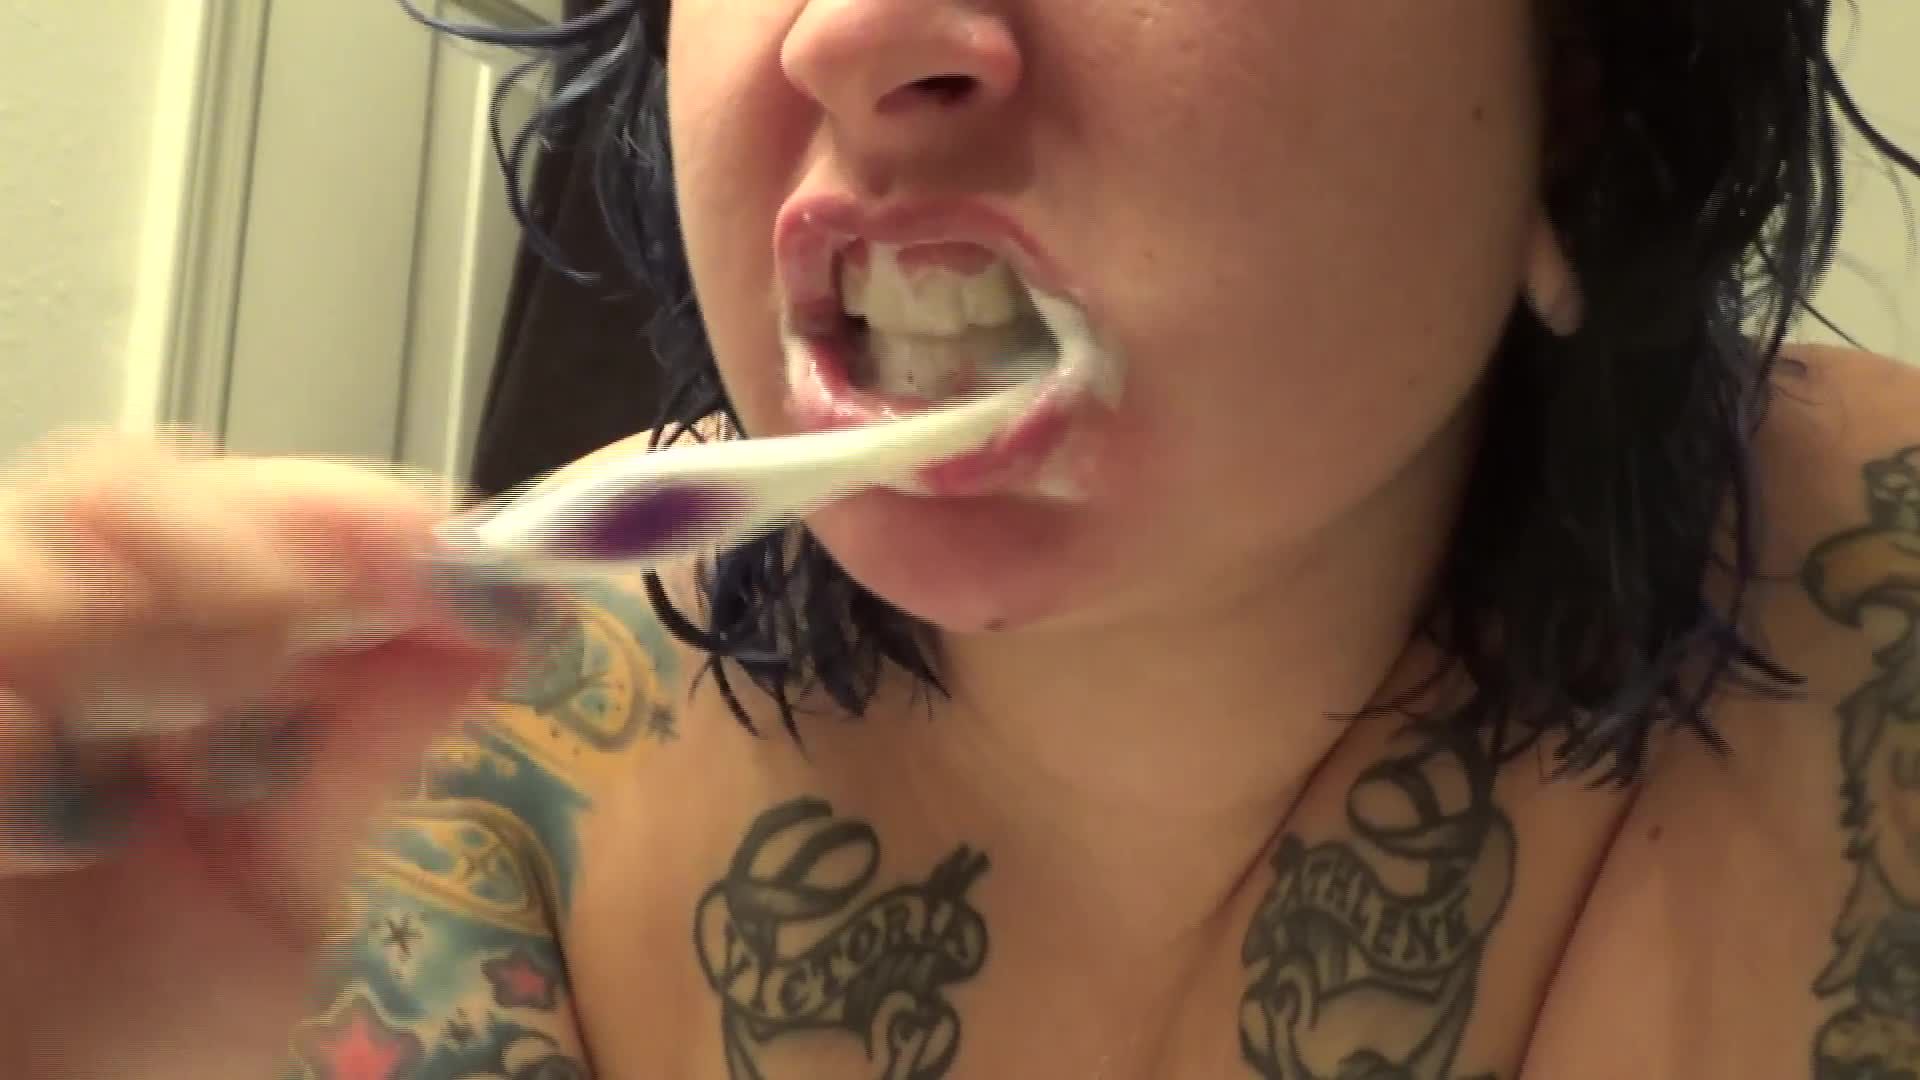 brushing my teeth